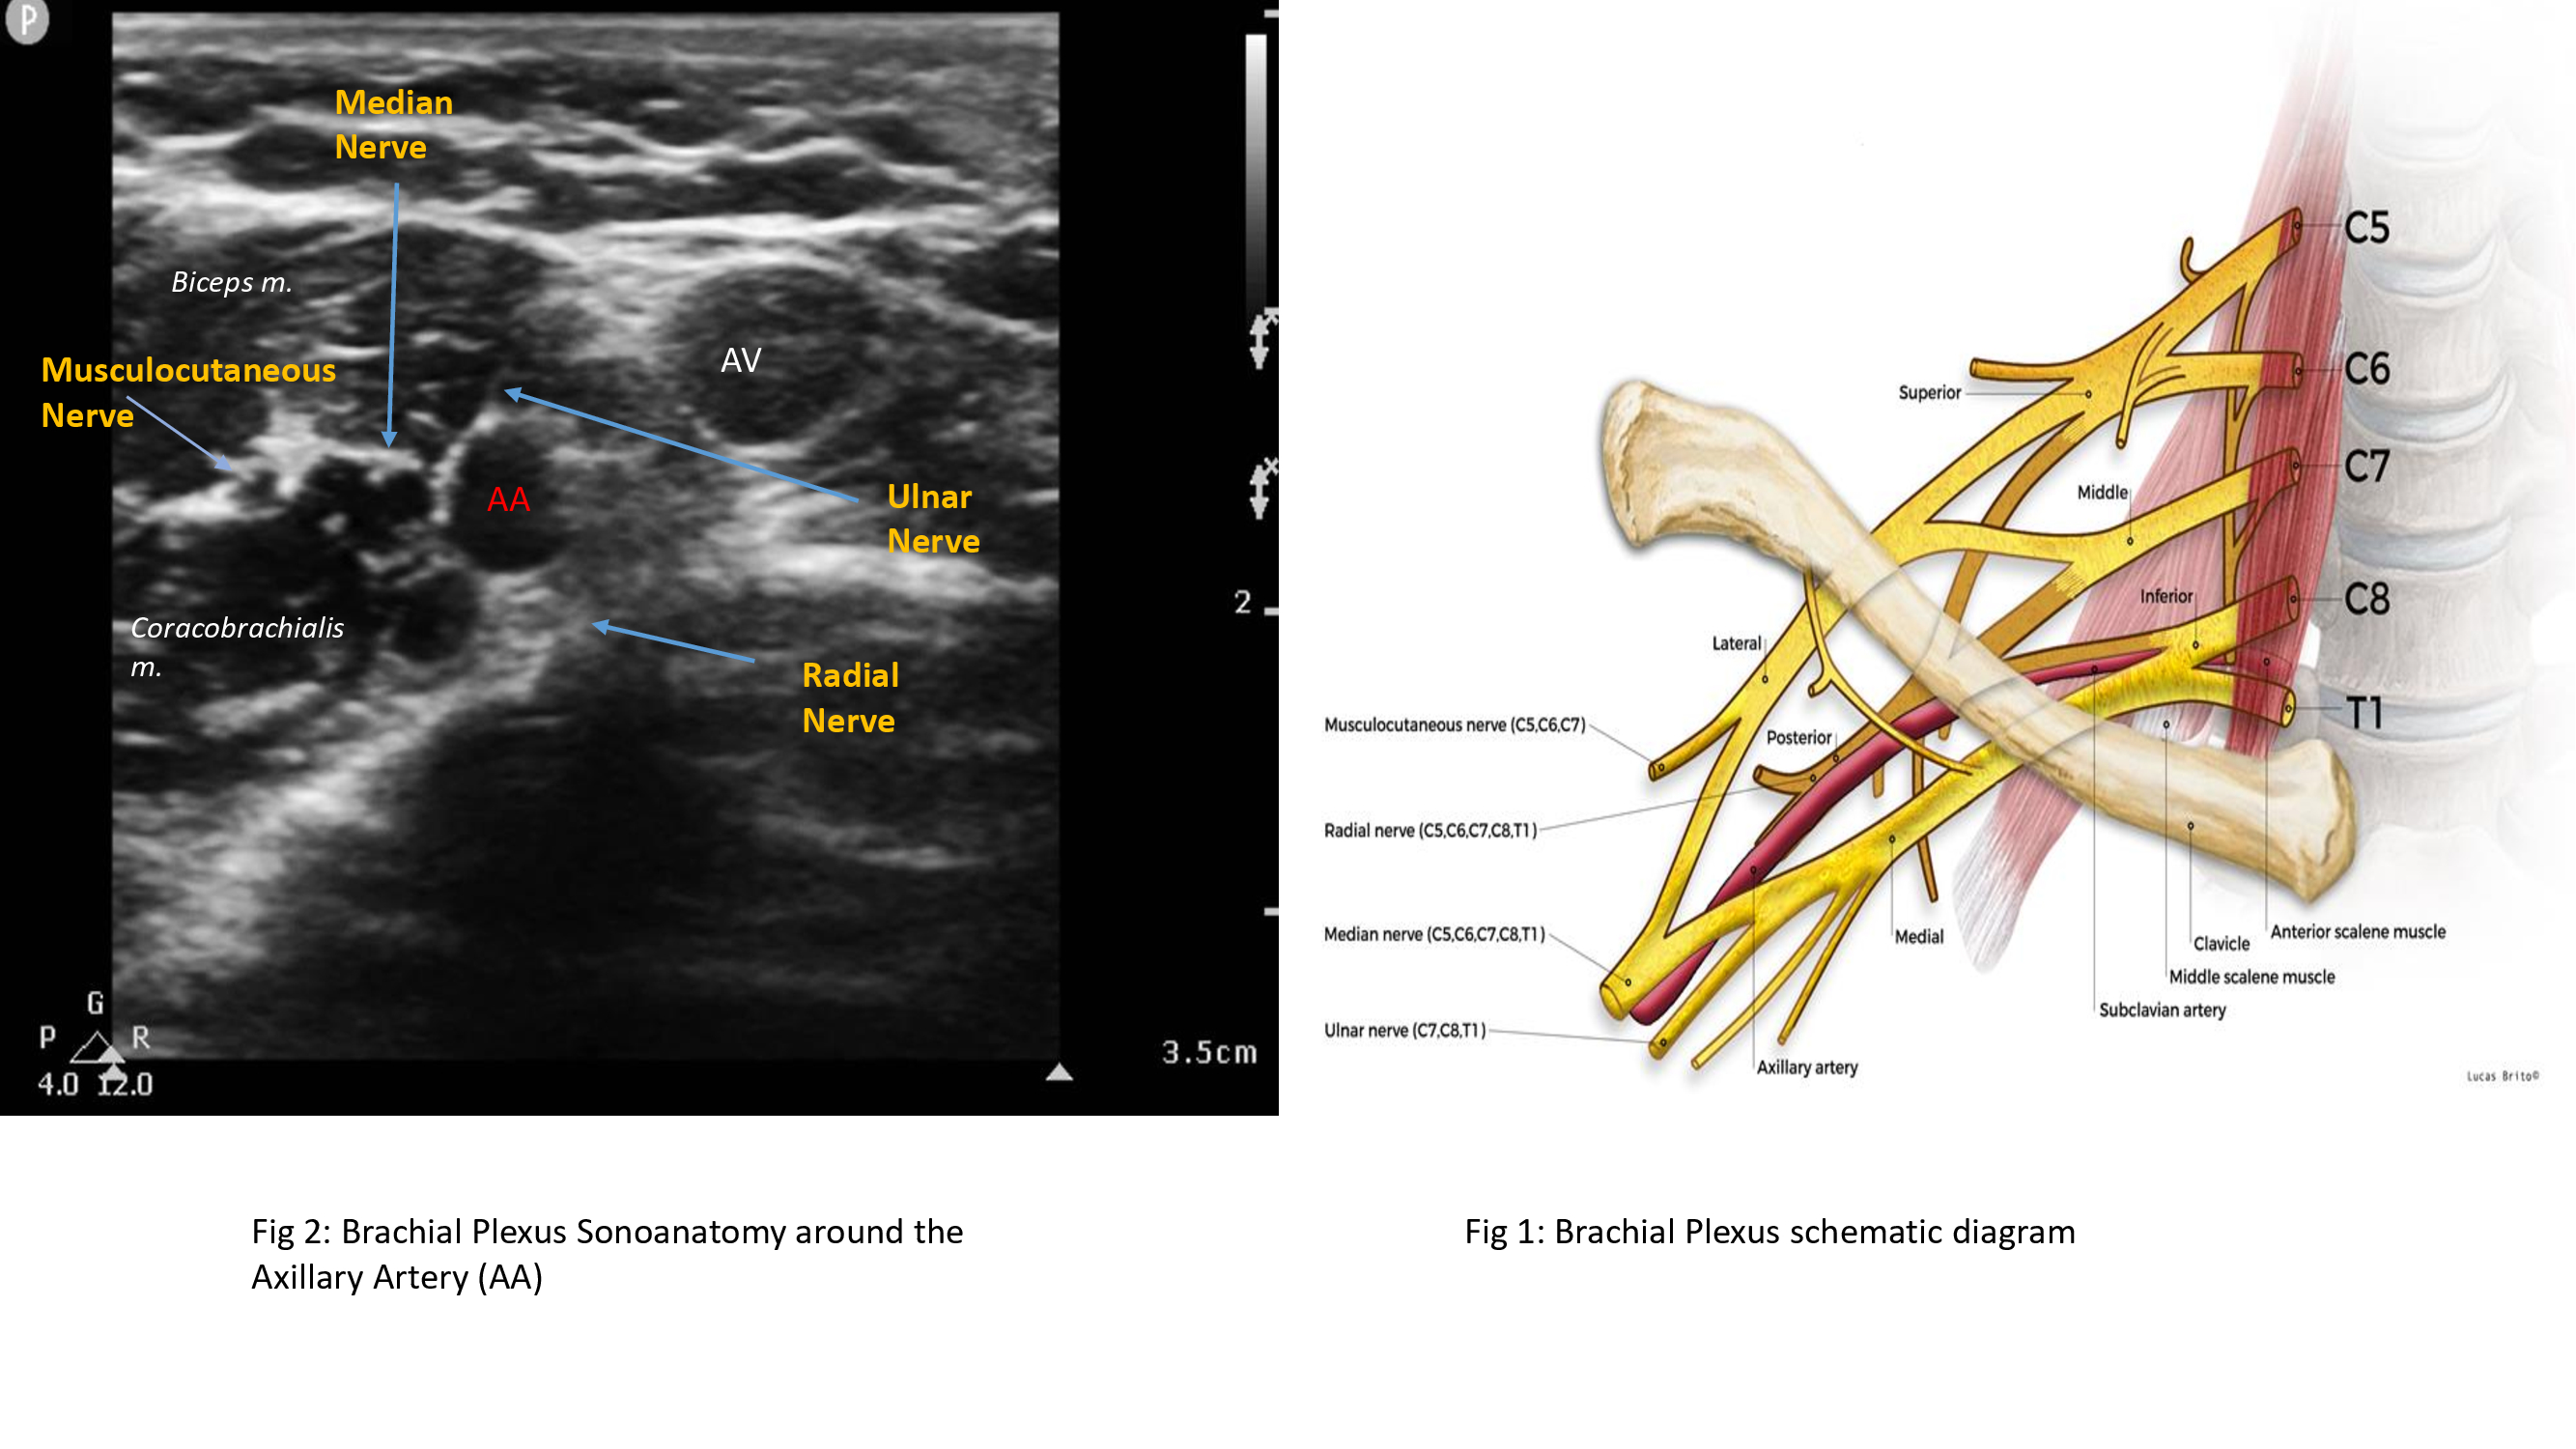 Fig 1: Schematic diagram of brachial plexus
Fig 2: Ultrasound image of the brachial Plexus at the level of axillary artery